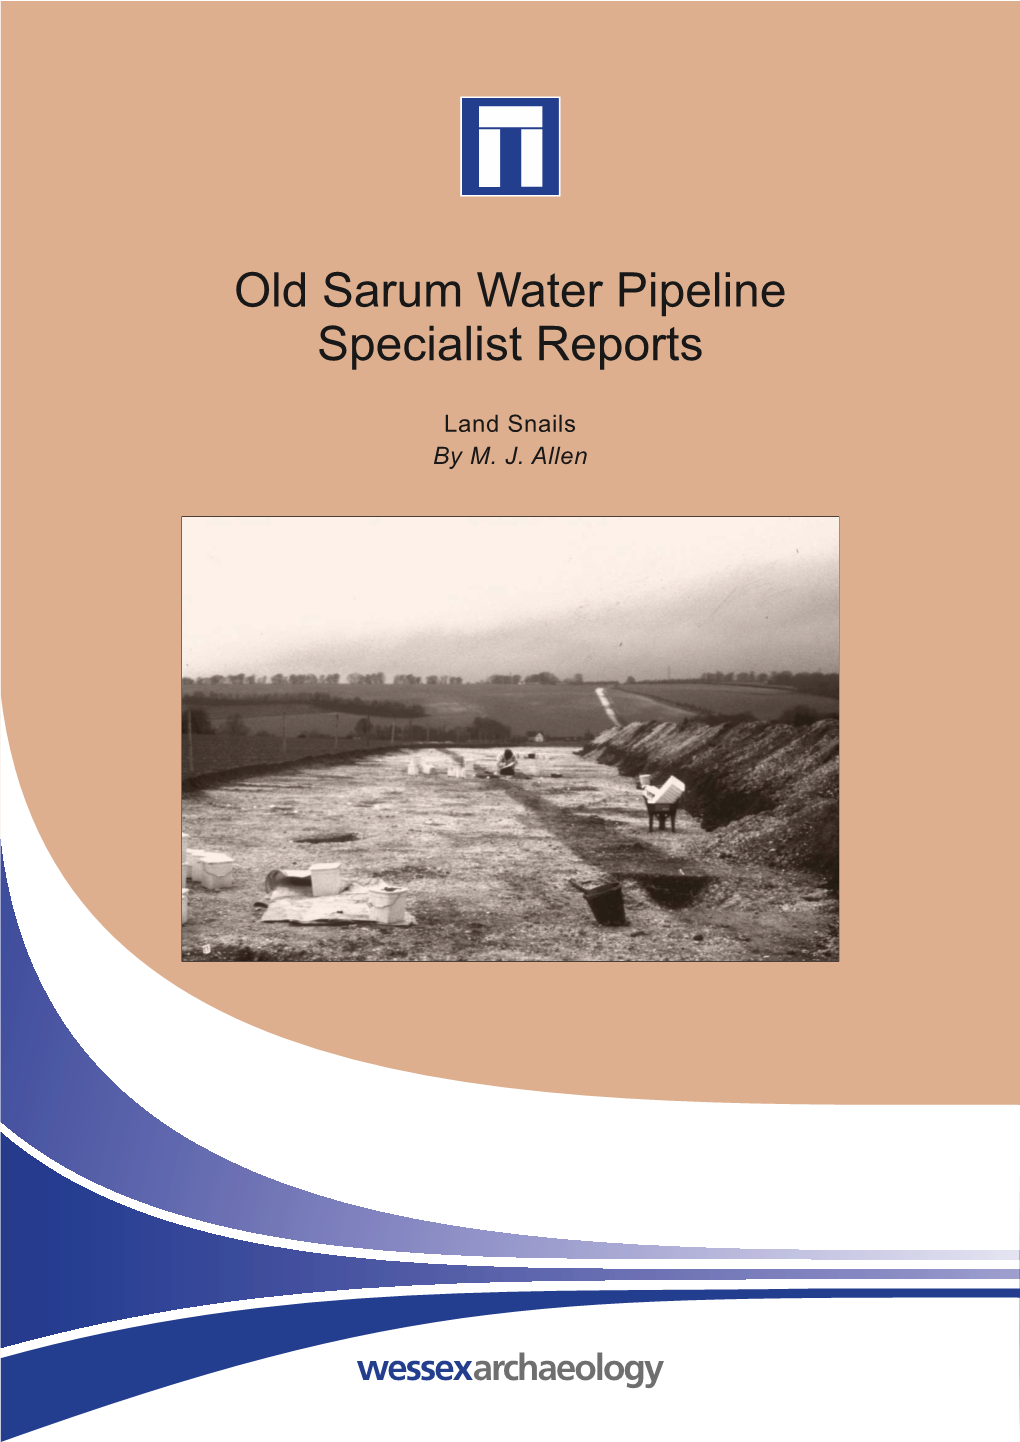 Old Sarum Pipeline-Land Snails.Pdf